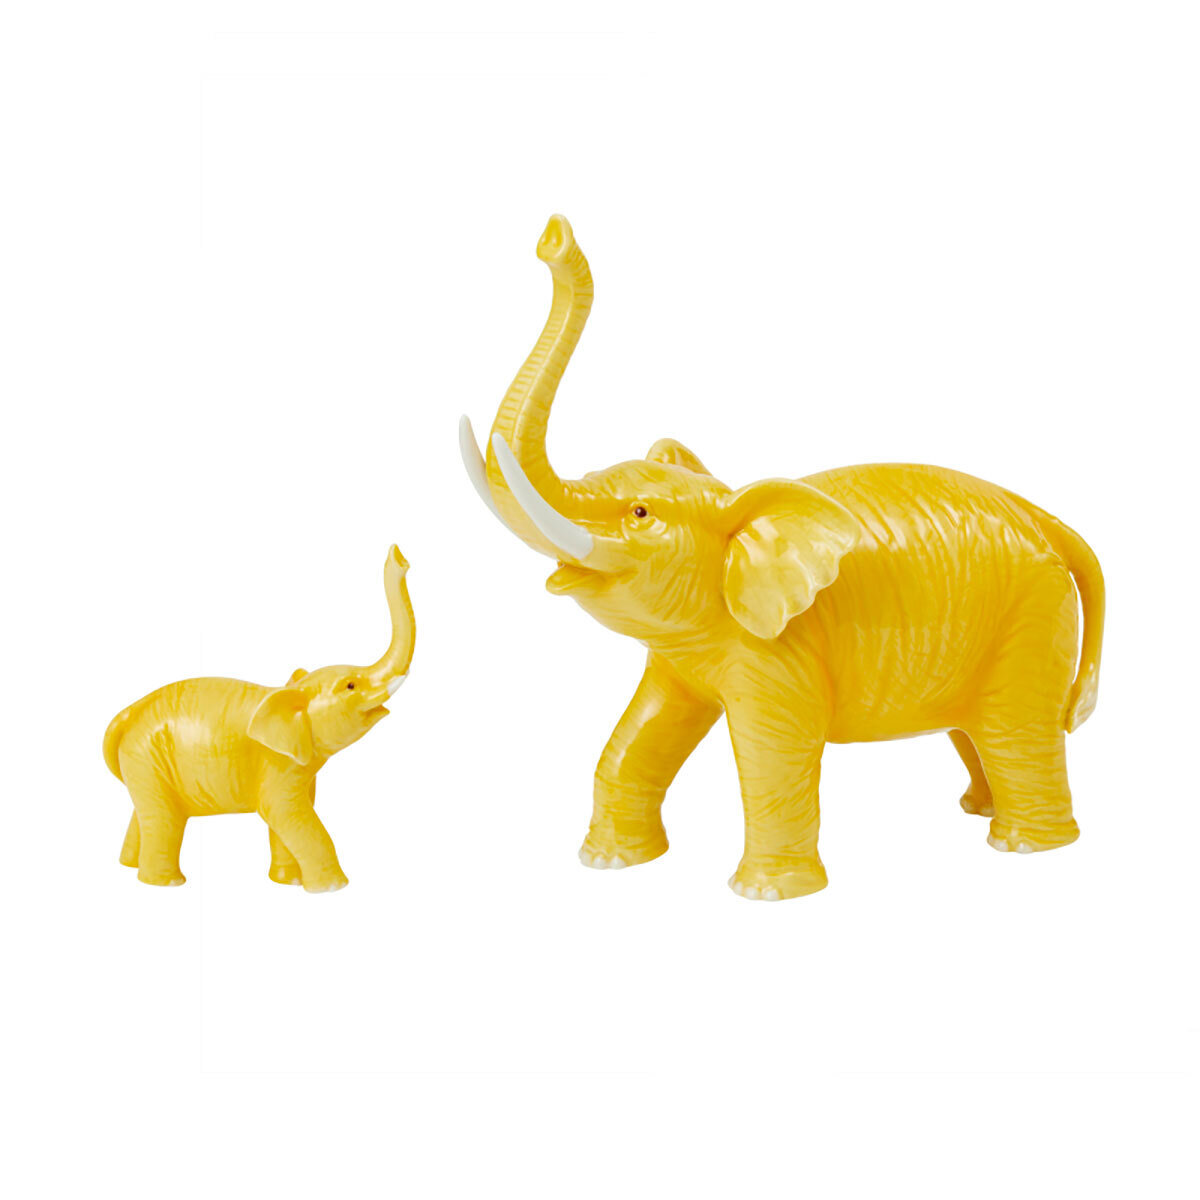 Franz Porcelain Faith And Hope Elephant Design Sculptured Porcelain Figurines Set of 2 FZ03877